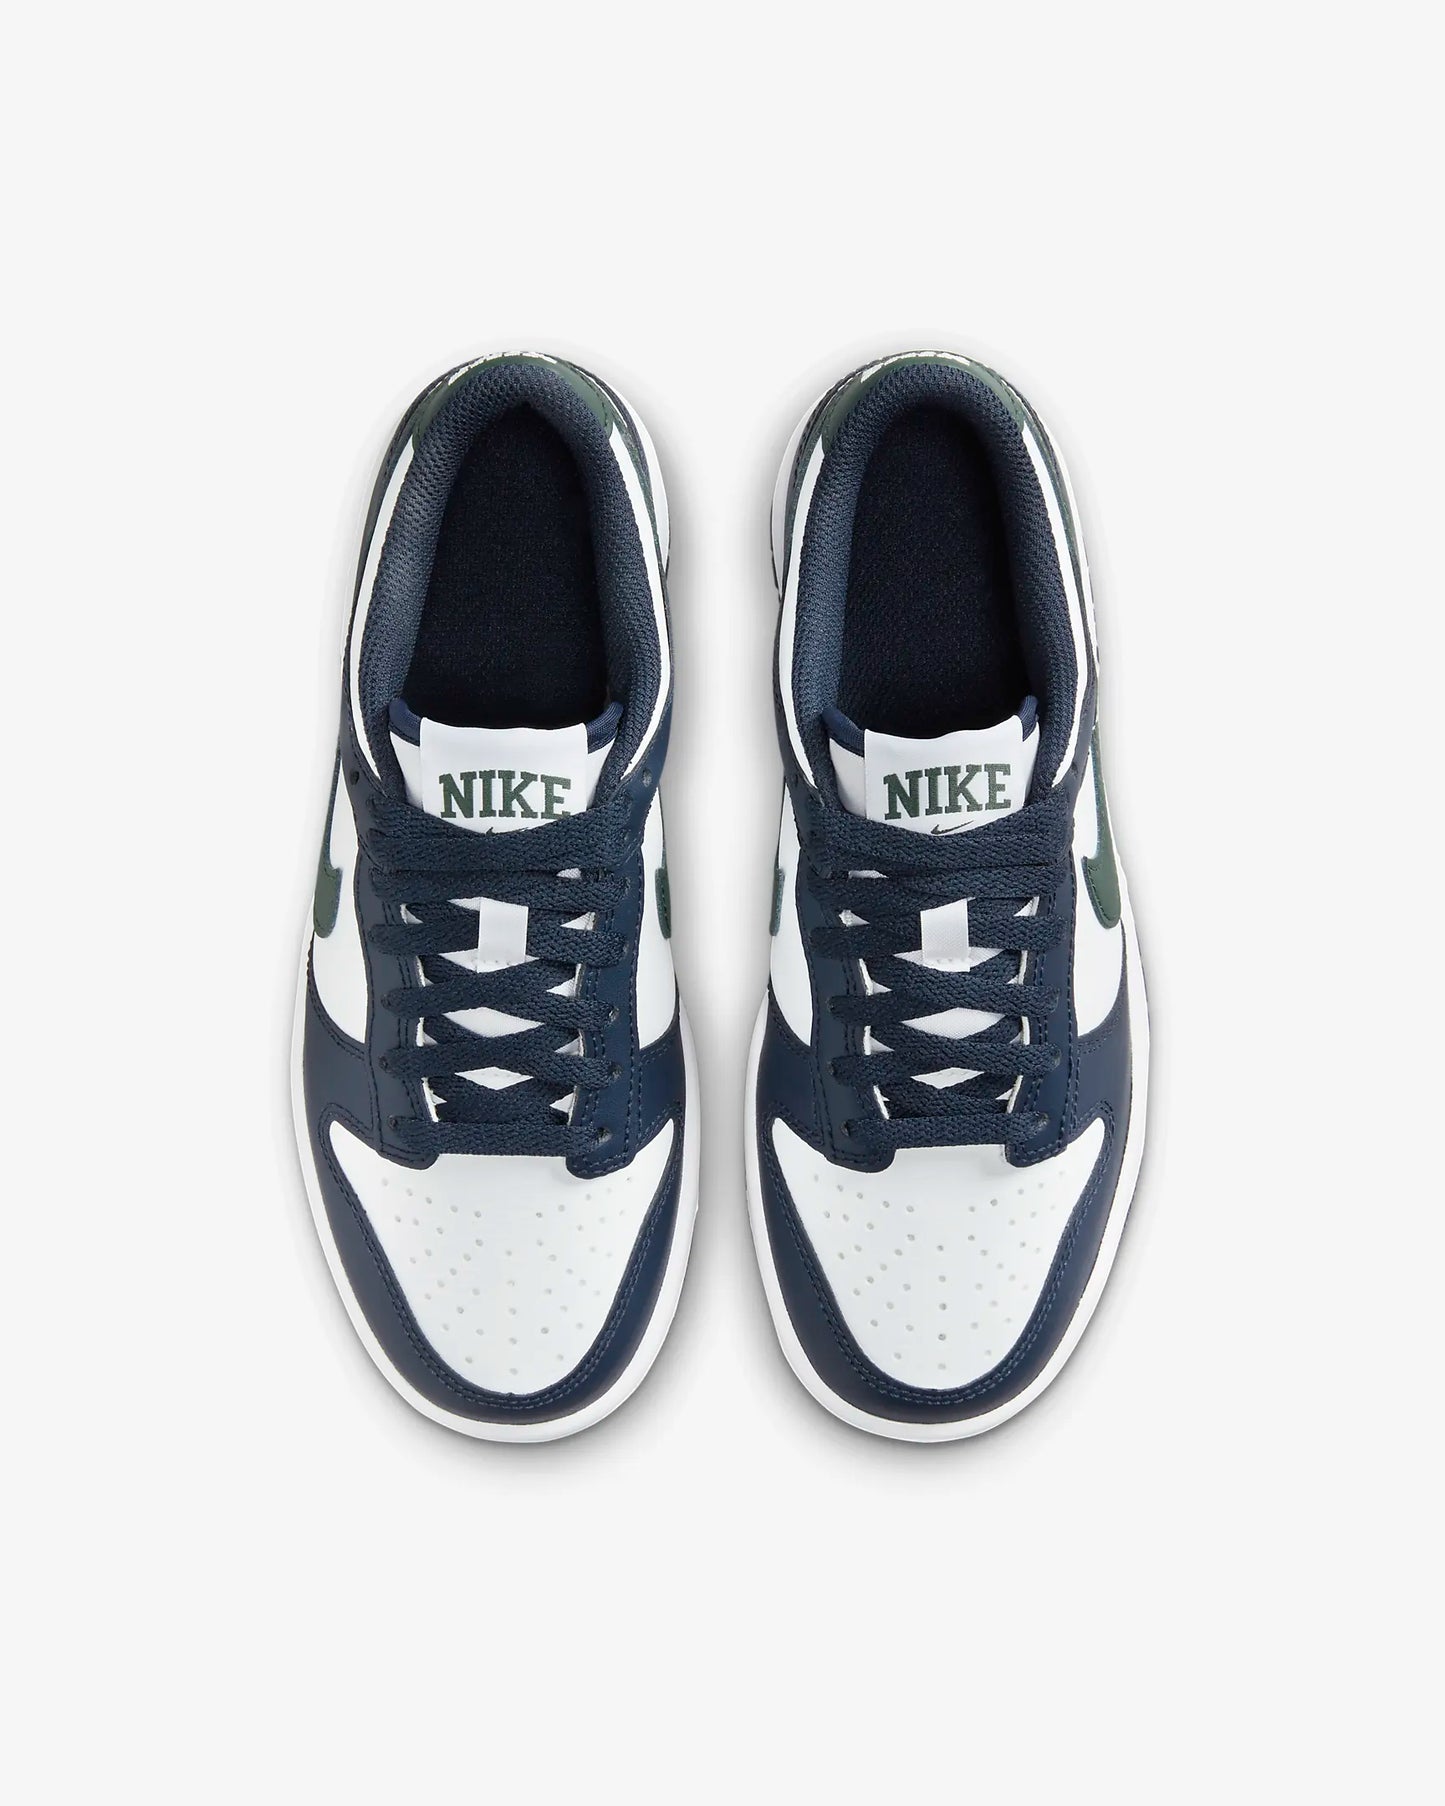 Nike "Dunk Low" GS - Obsidian / Vintage Green / White